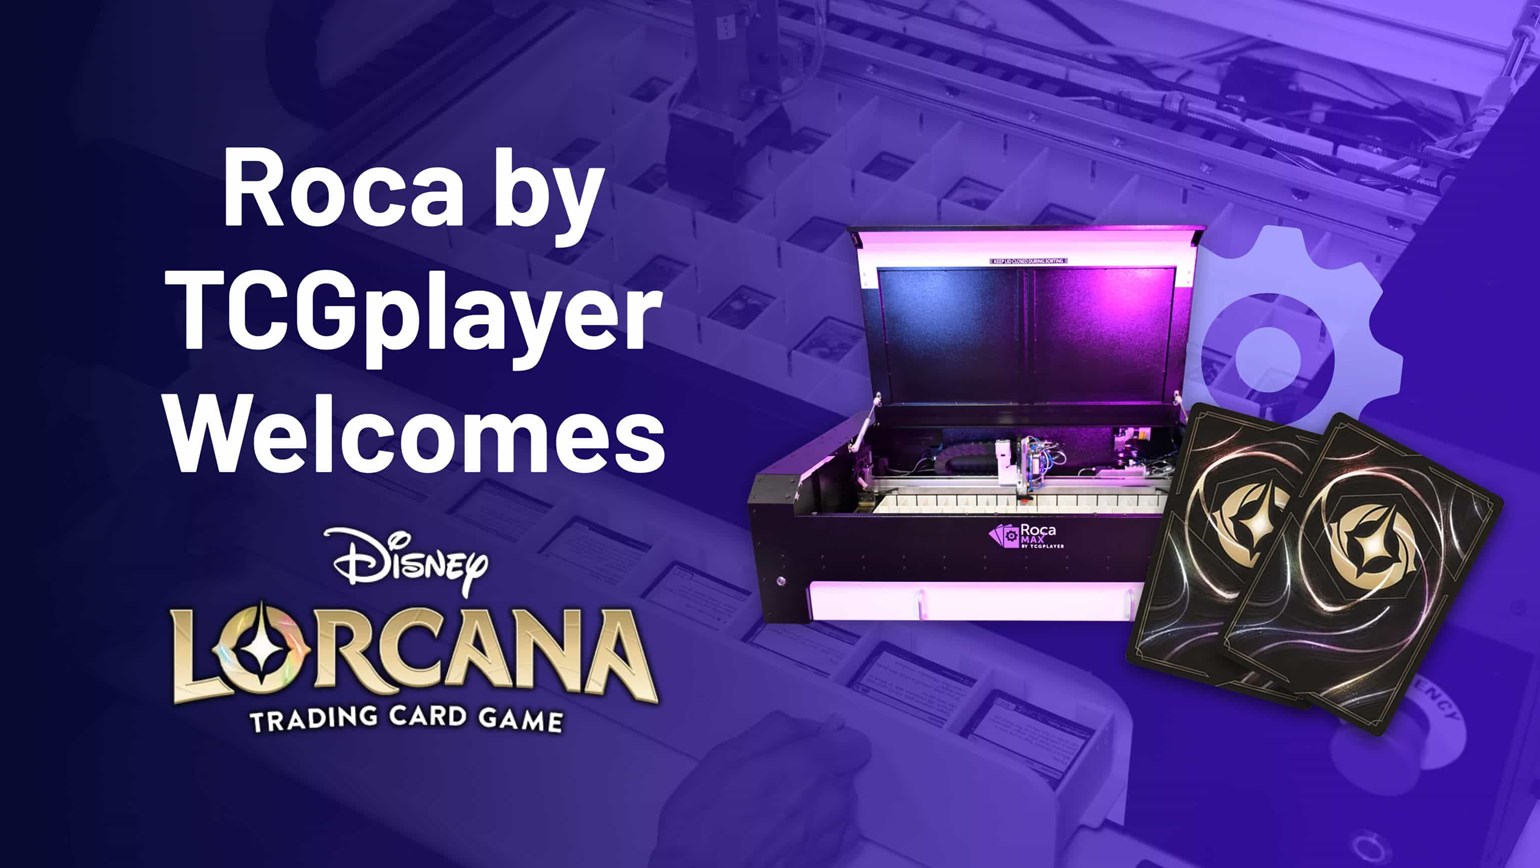 Roca by TCGplayer Welcomes Disney Lorcana